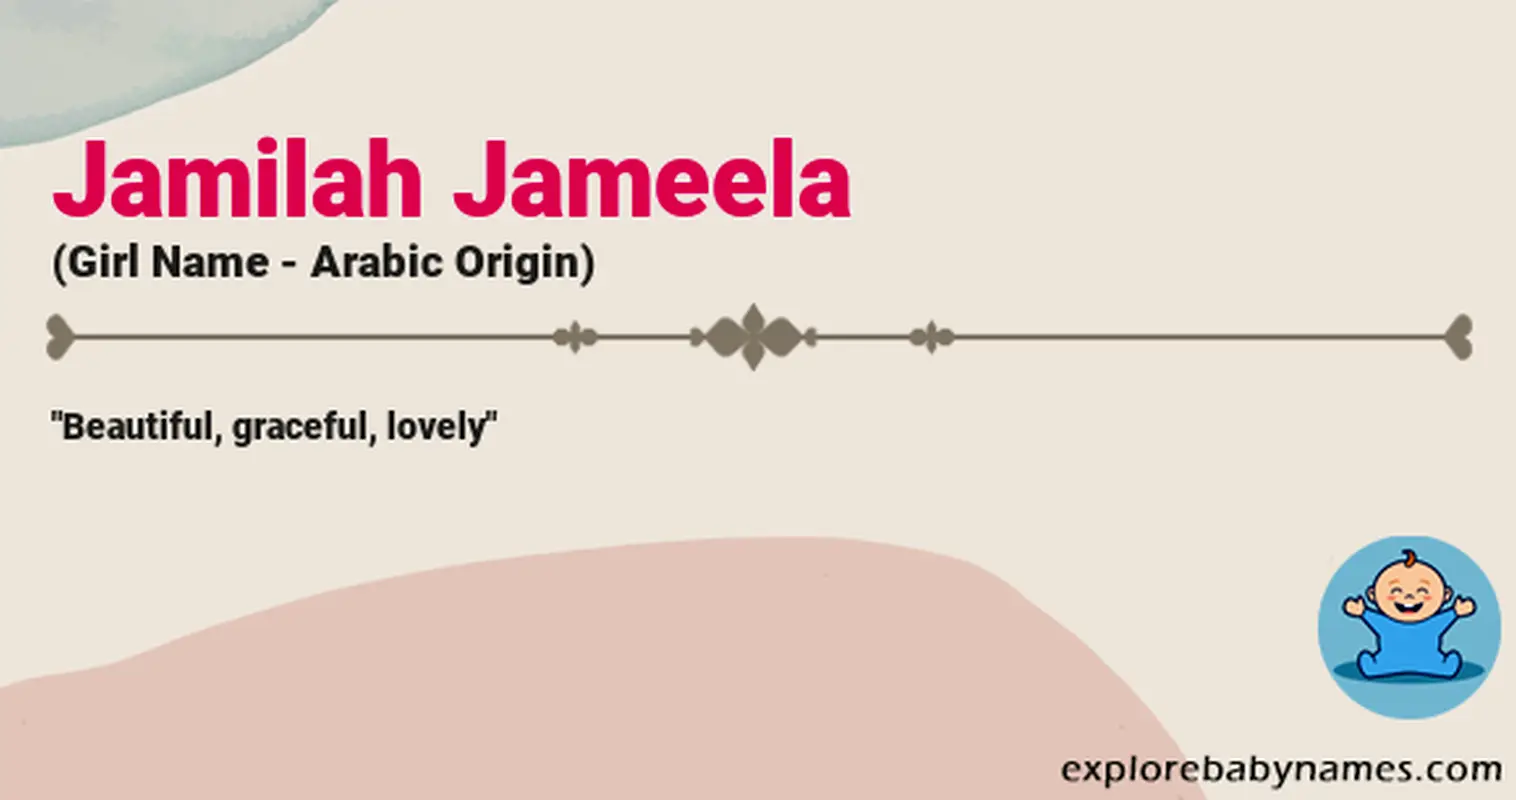 Meaning of Jamilah Jameela